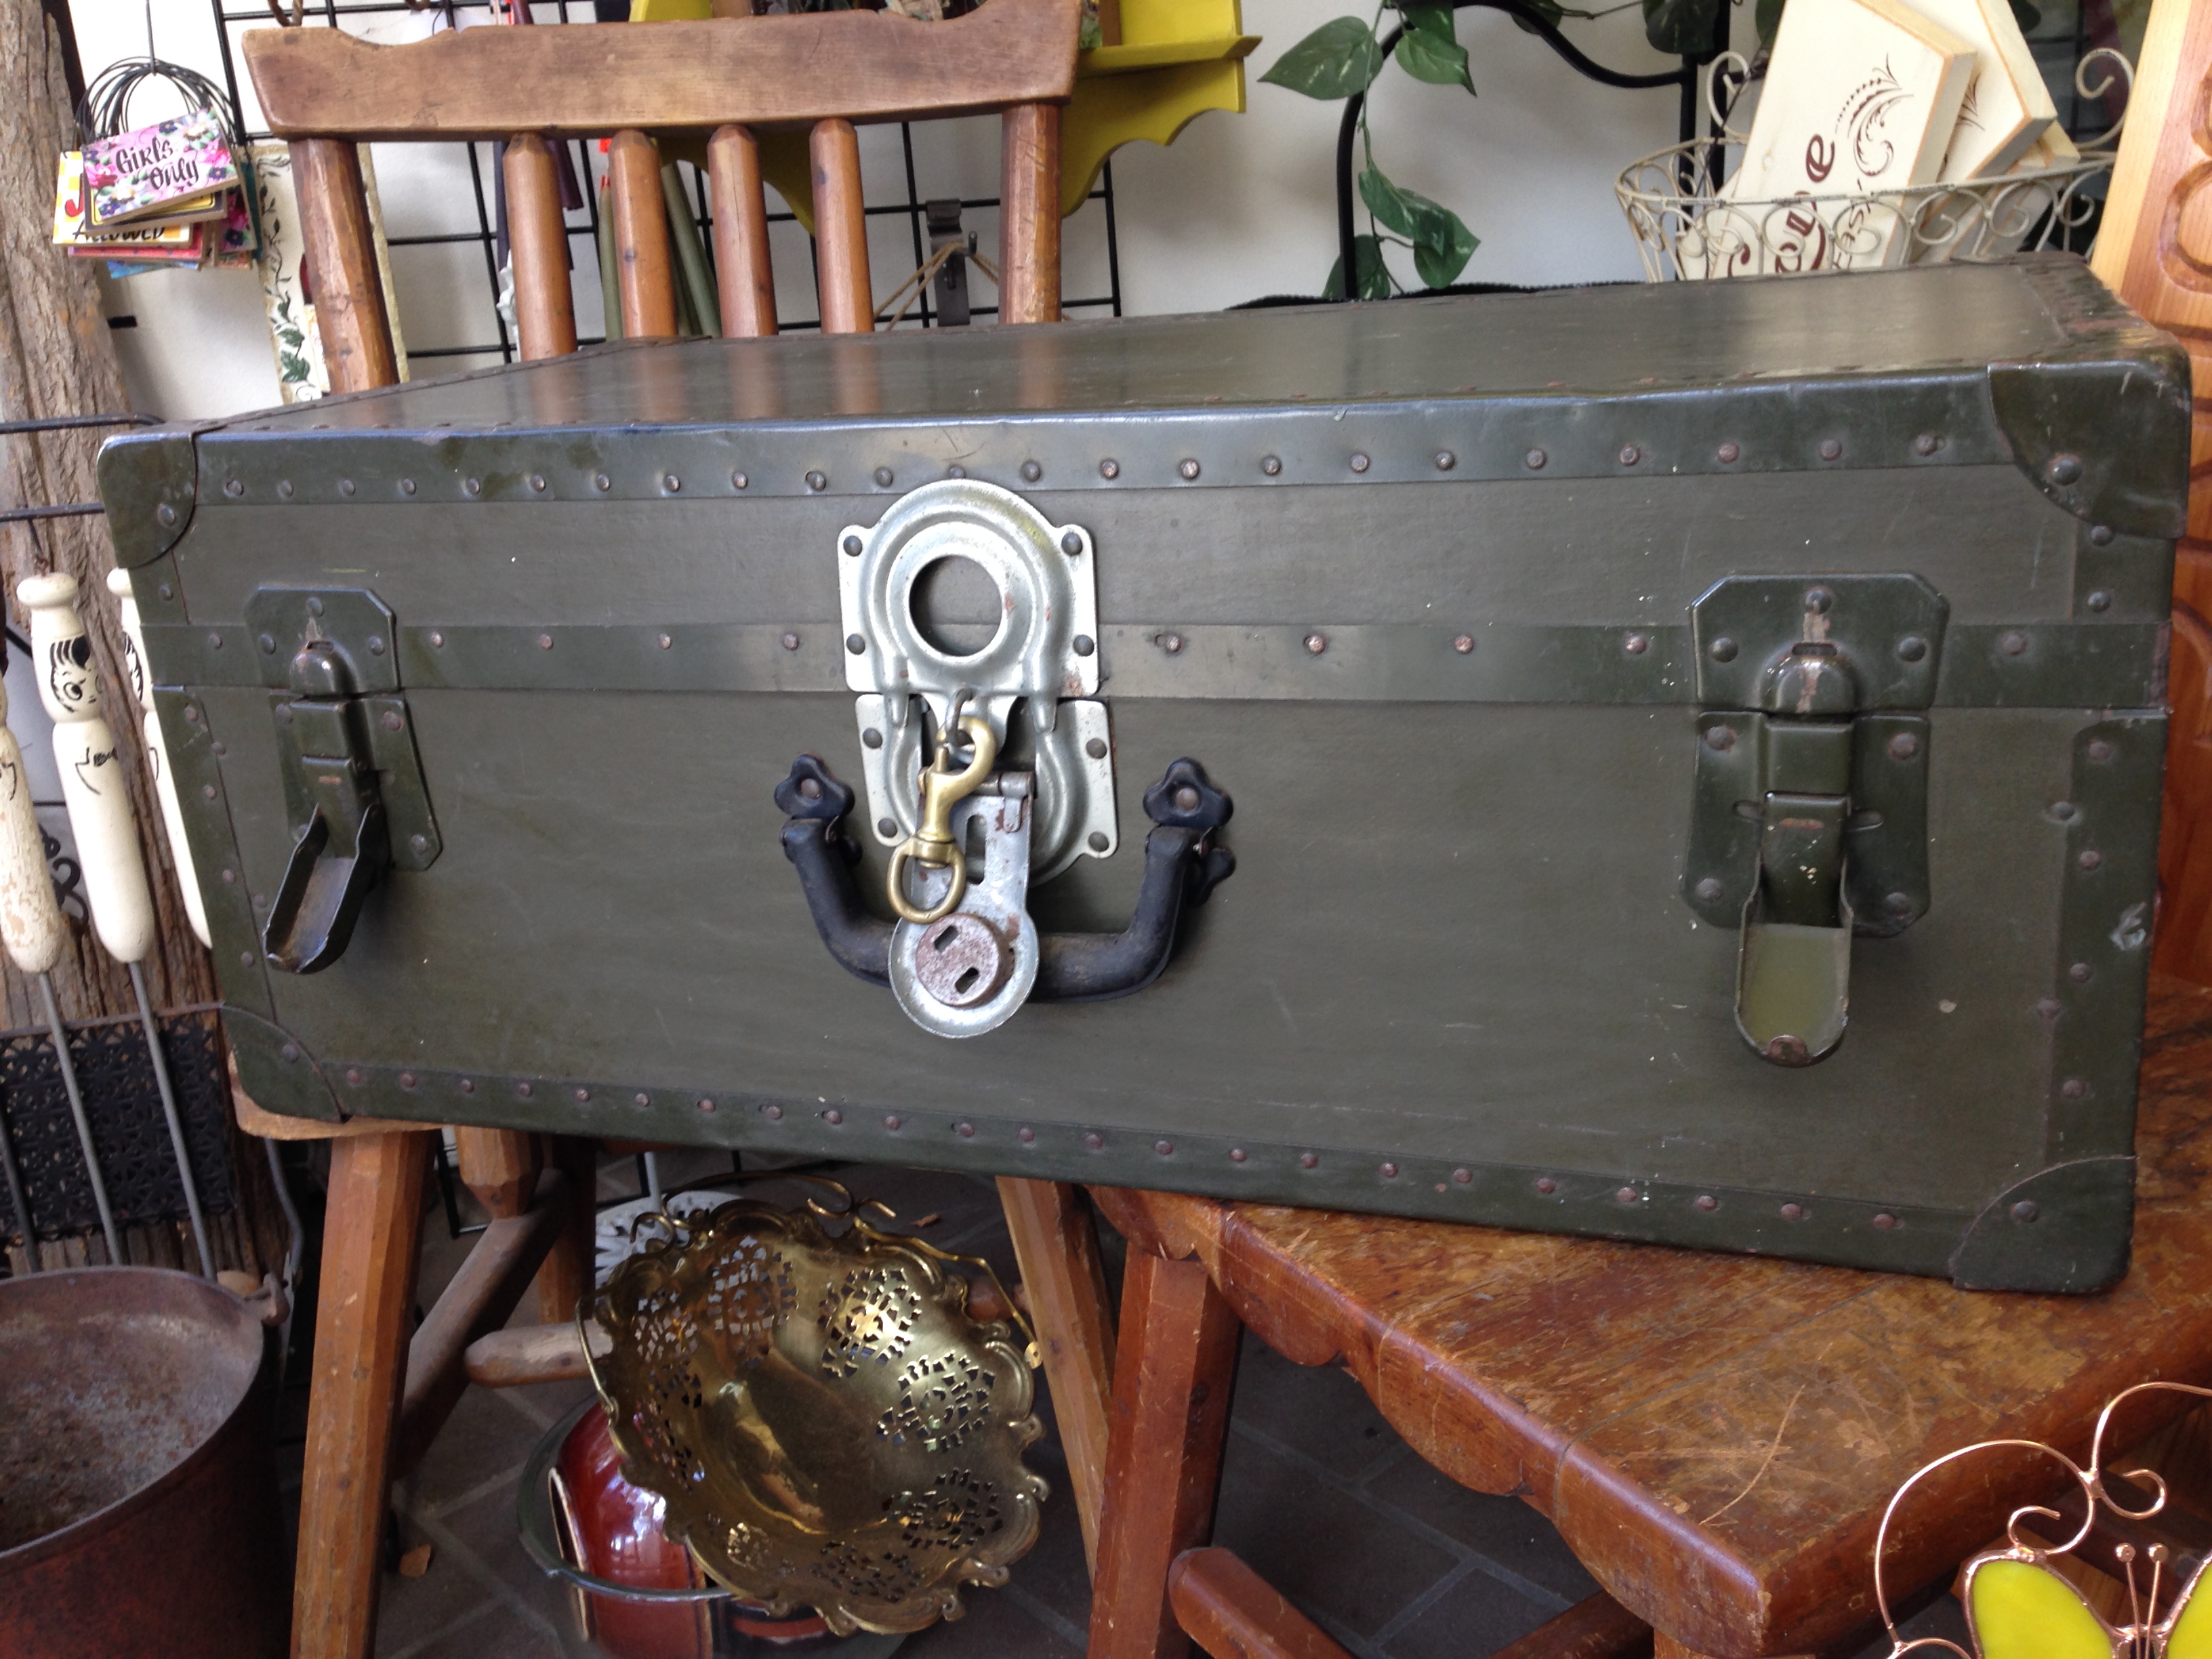 VINTAGE WW2 Steamer trunk army green military foot locker suitcase